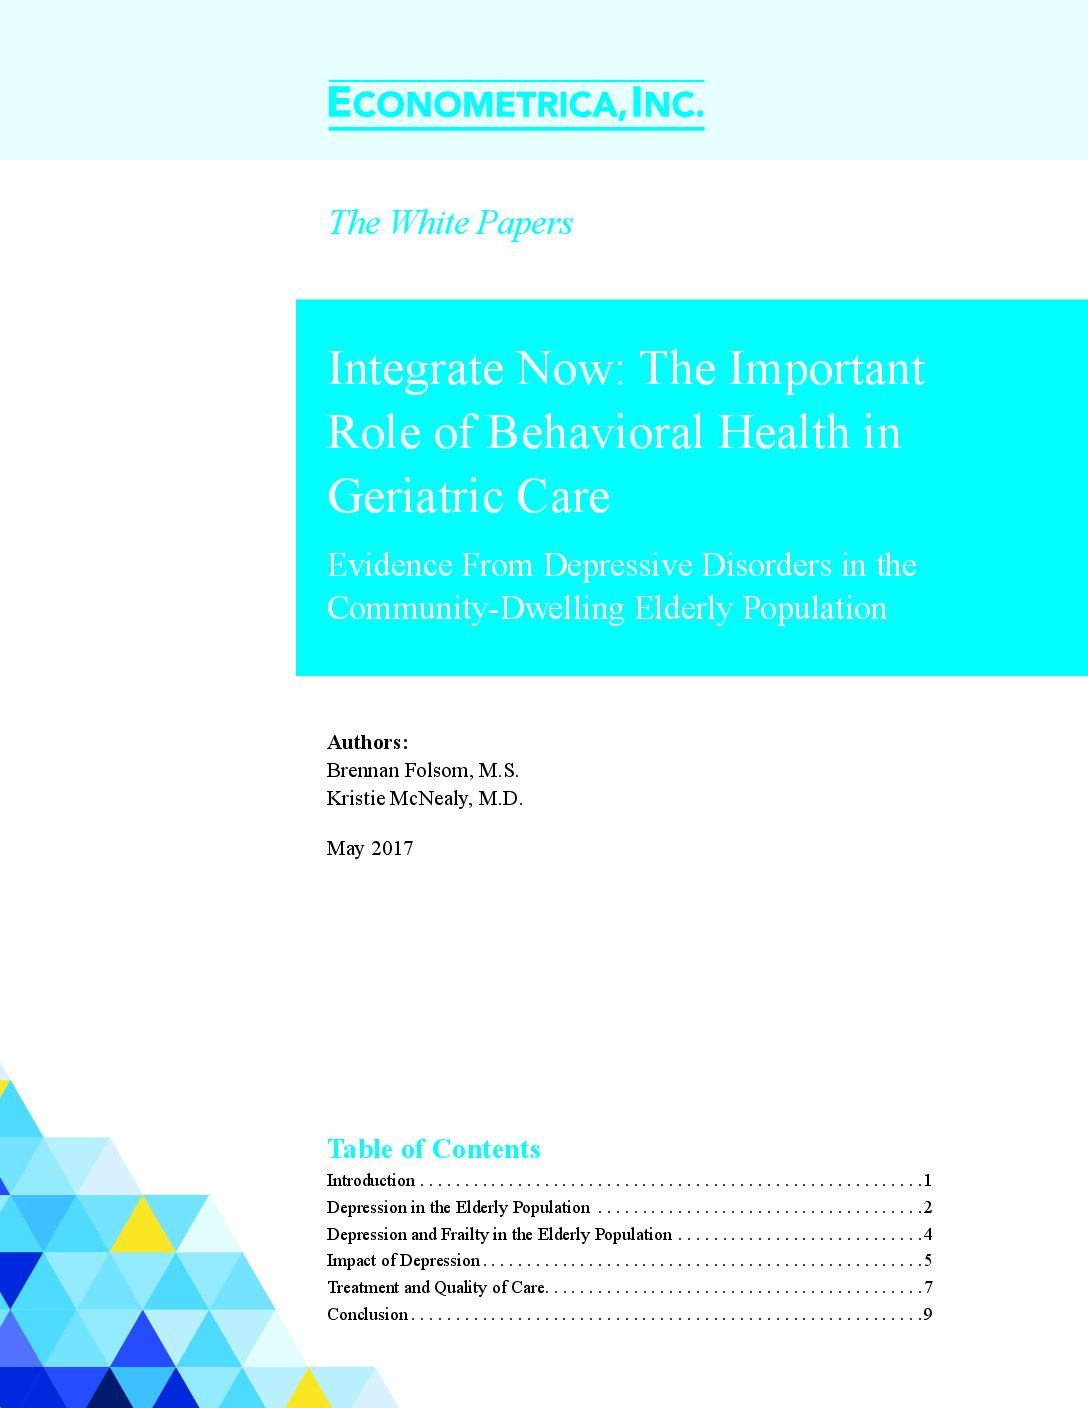 Important Role of Behavioral Health in Geriatric Care 1 pdf